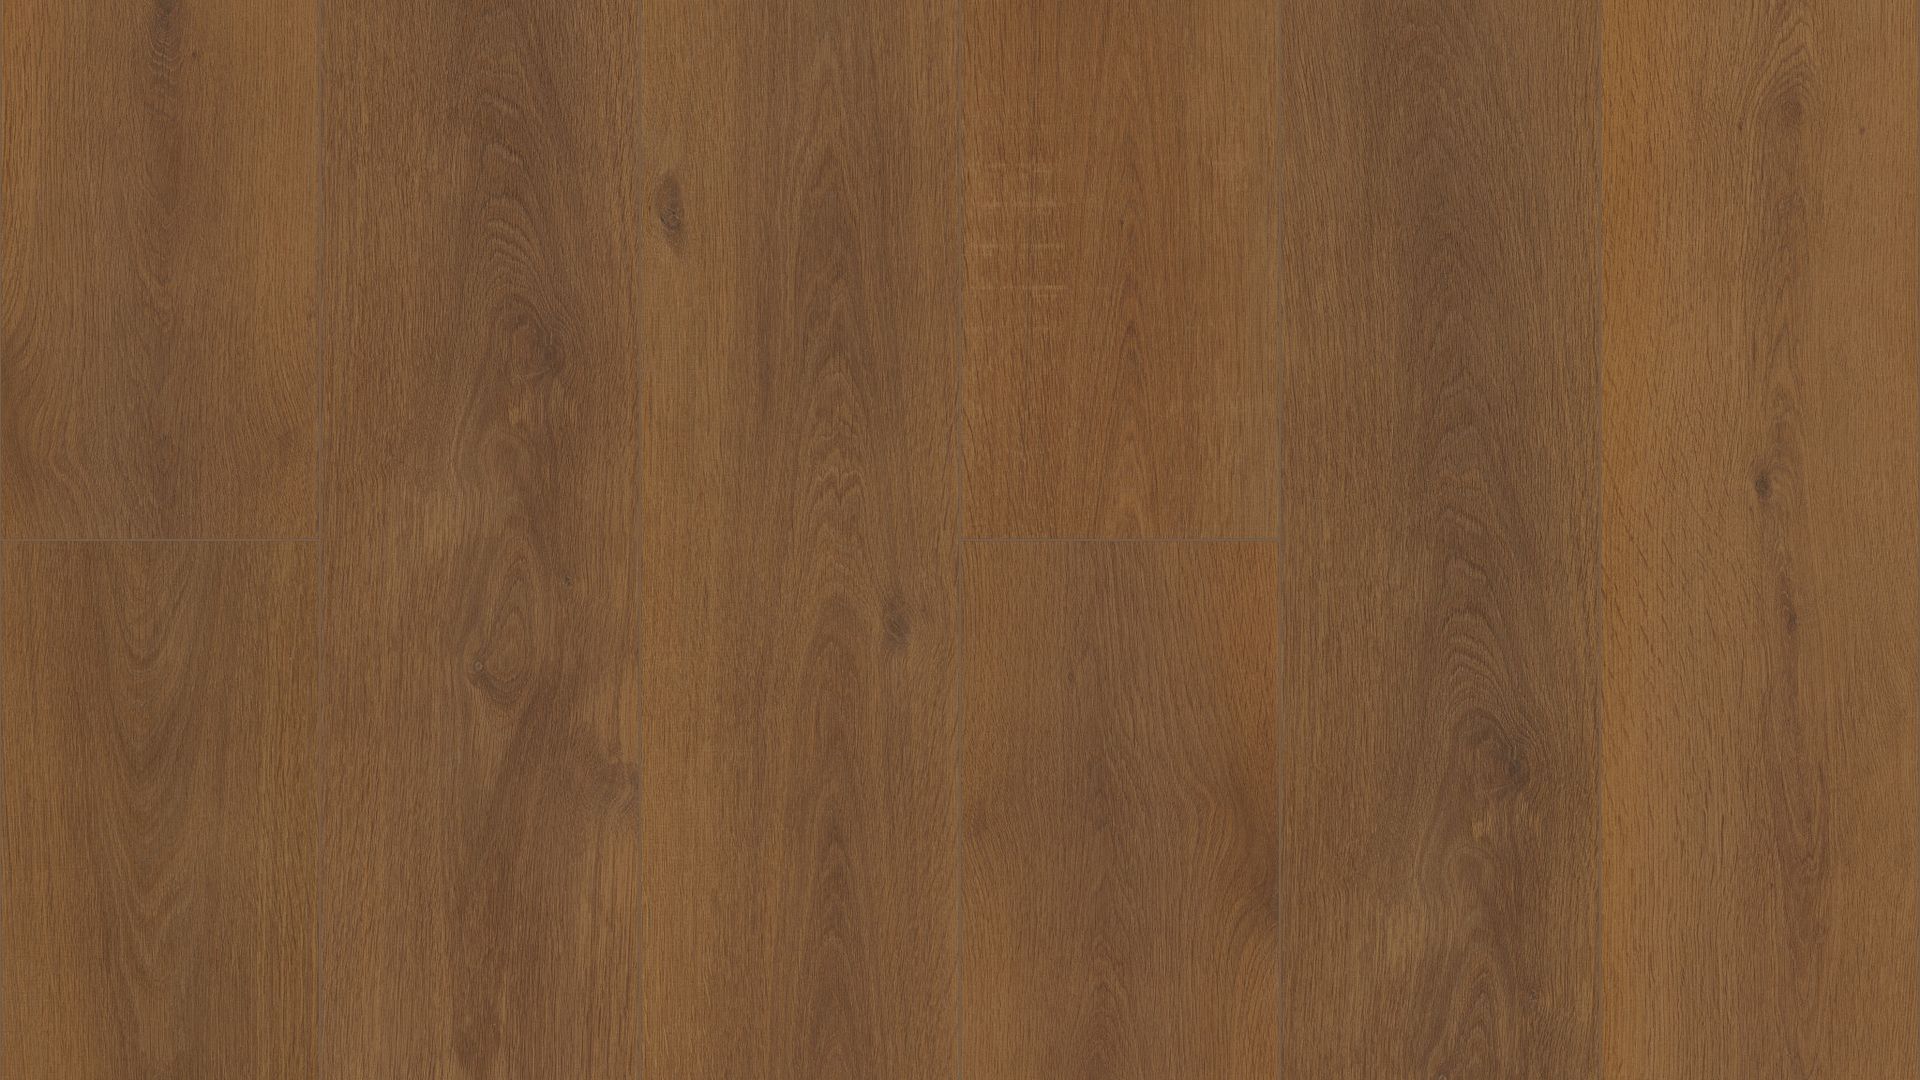 COREtec Pro Plus XL Enhanced HD hampshire oak vv488-02090 Vinyl Plank  Flooring | COREtec